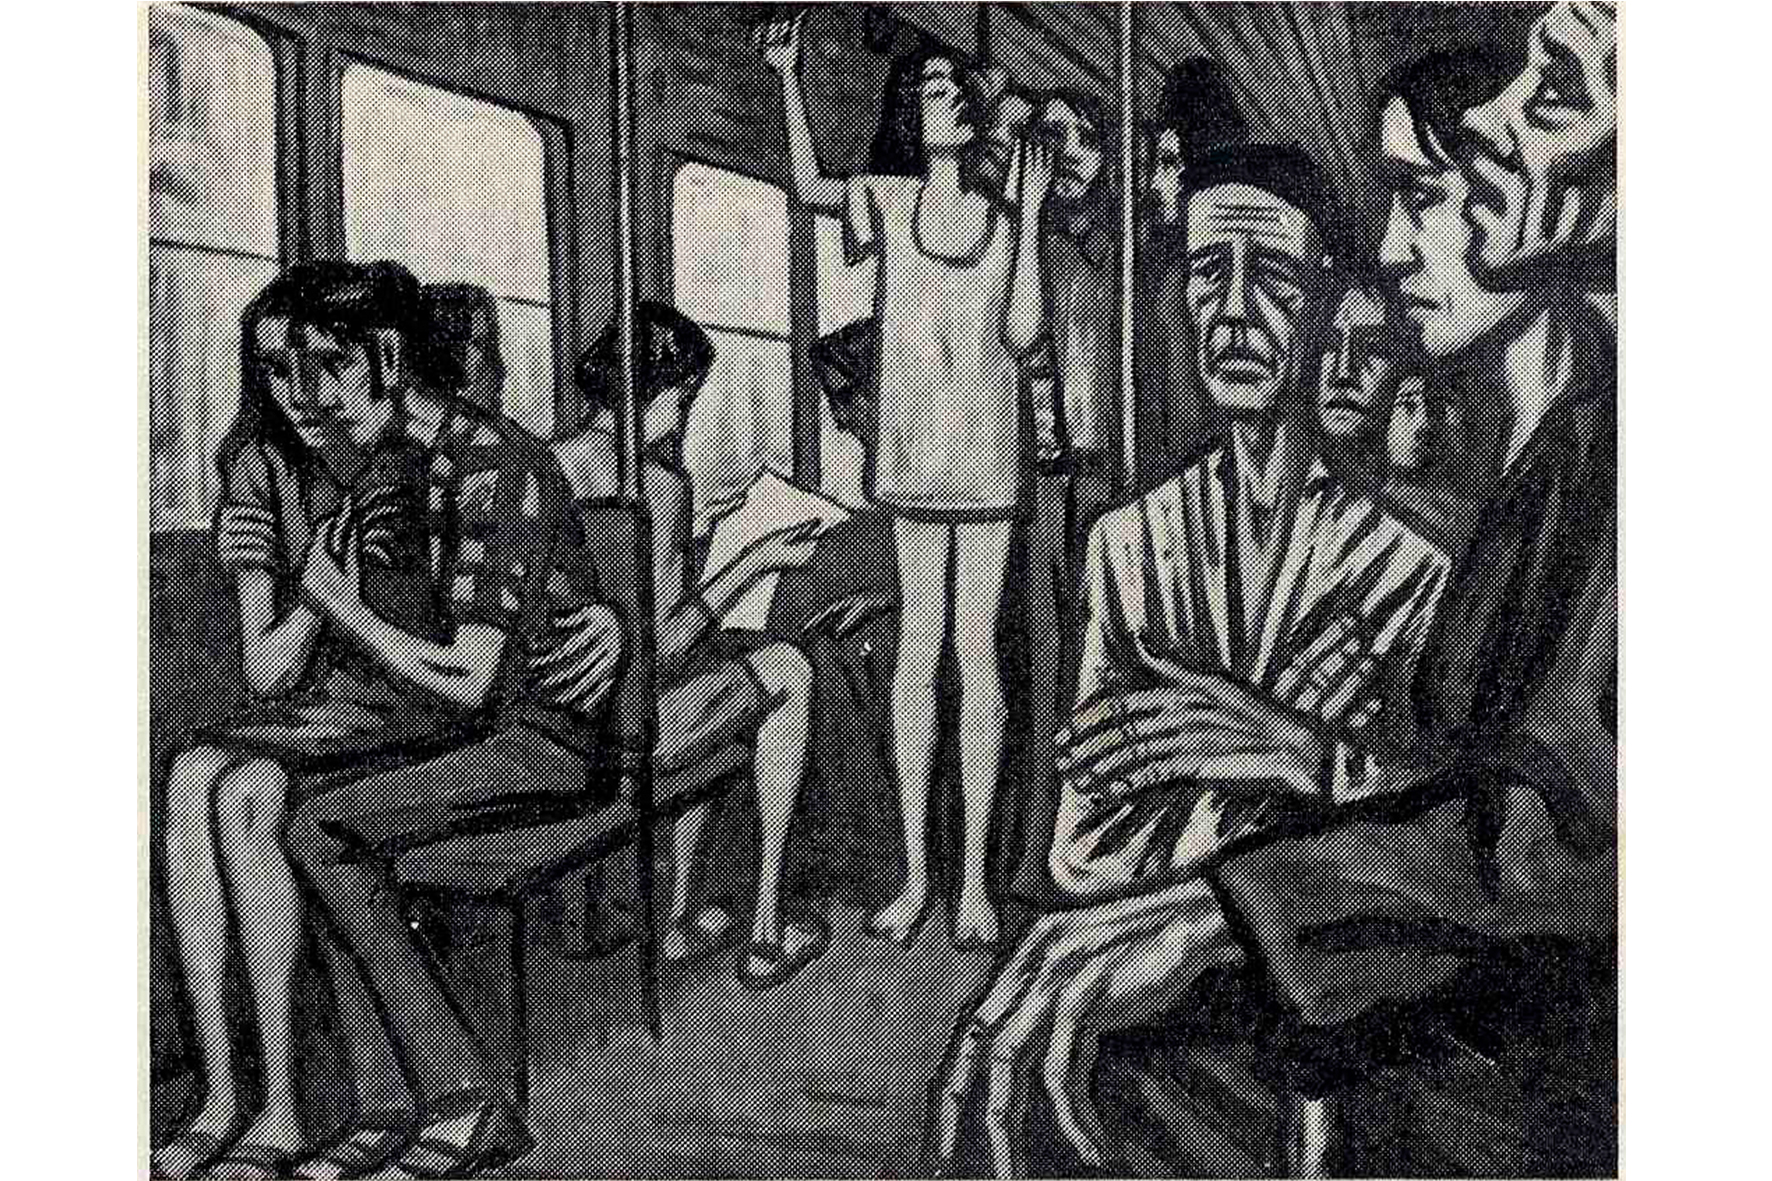 Bus de la mañana. Francisco Carreño Prieto. Catàleg "Salón de Otoño, 1970" Palma